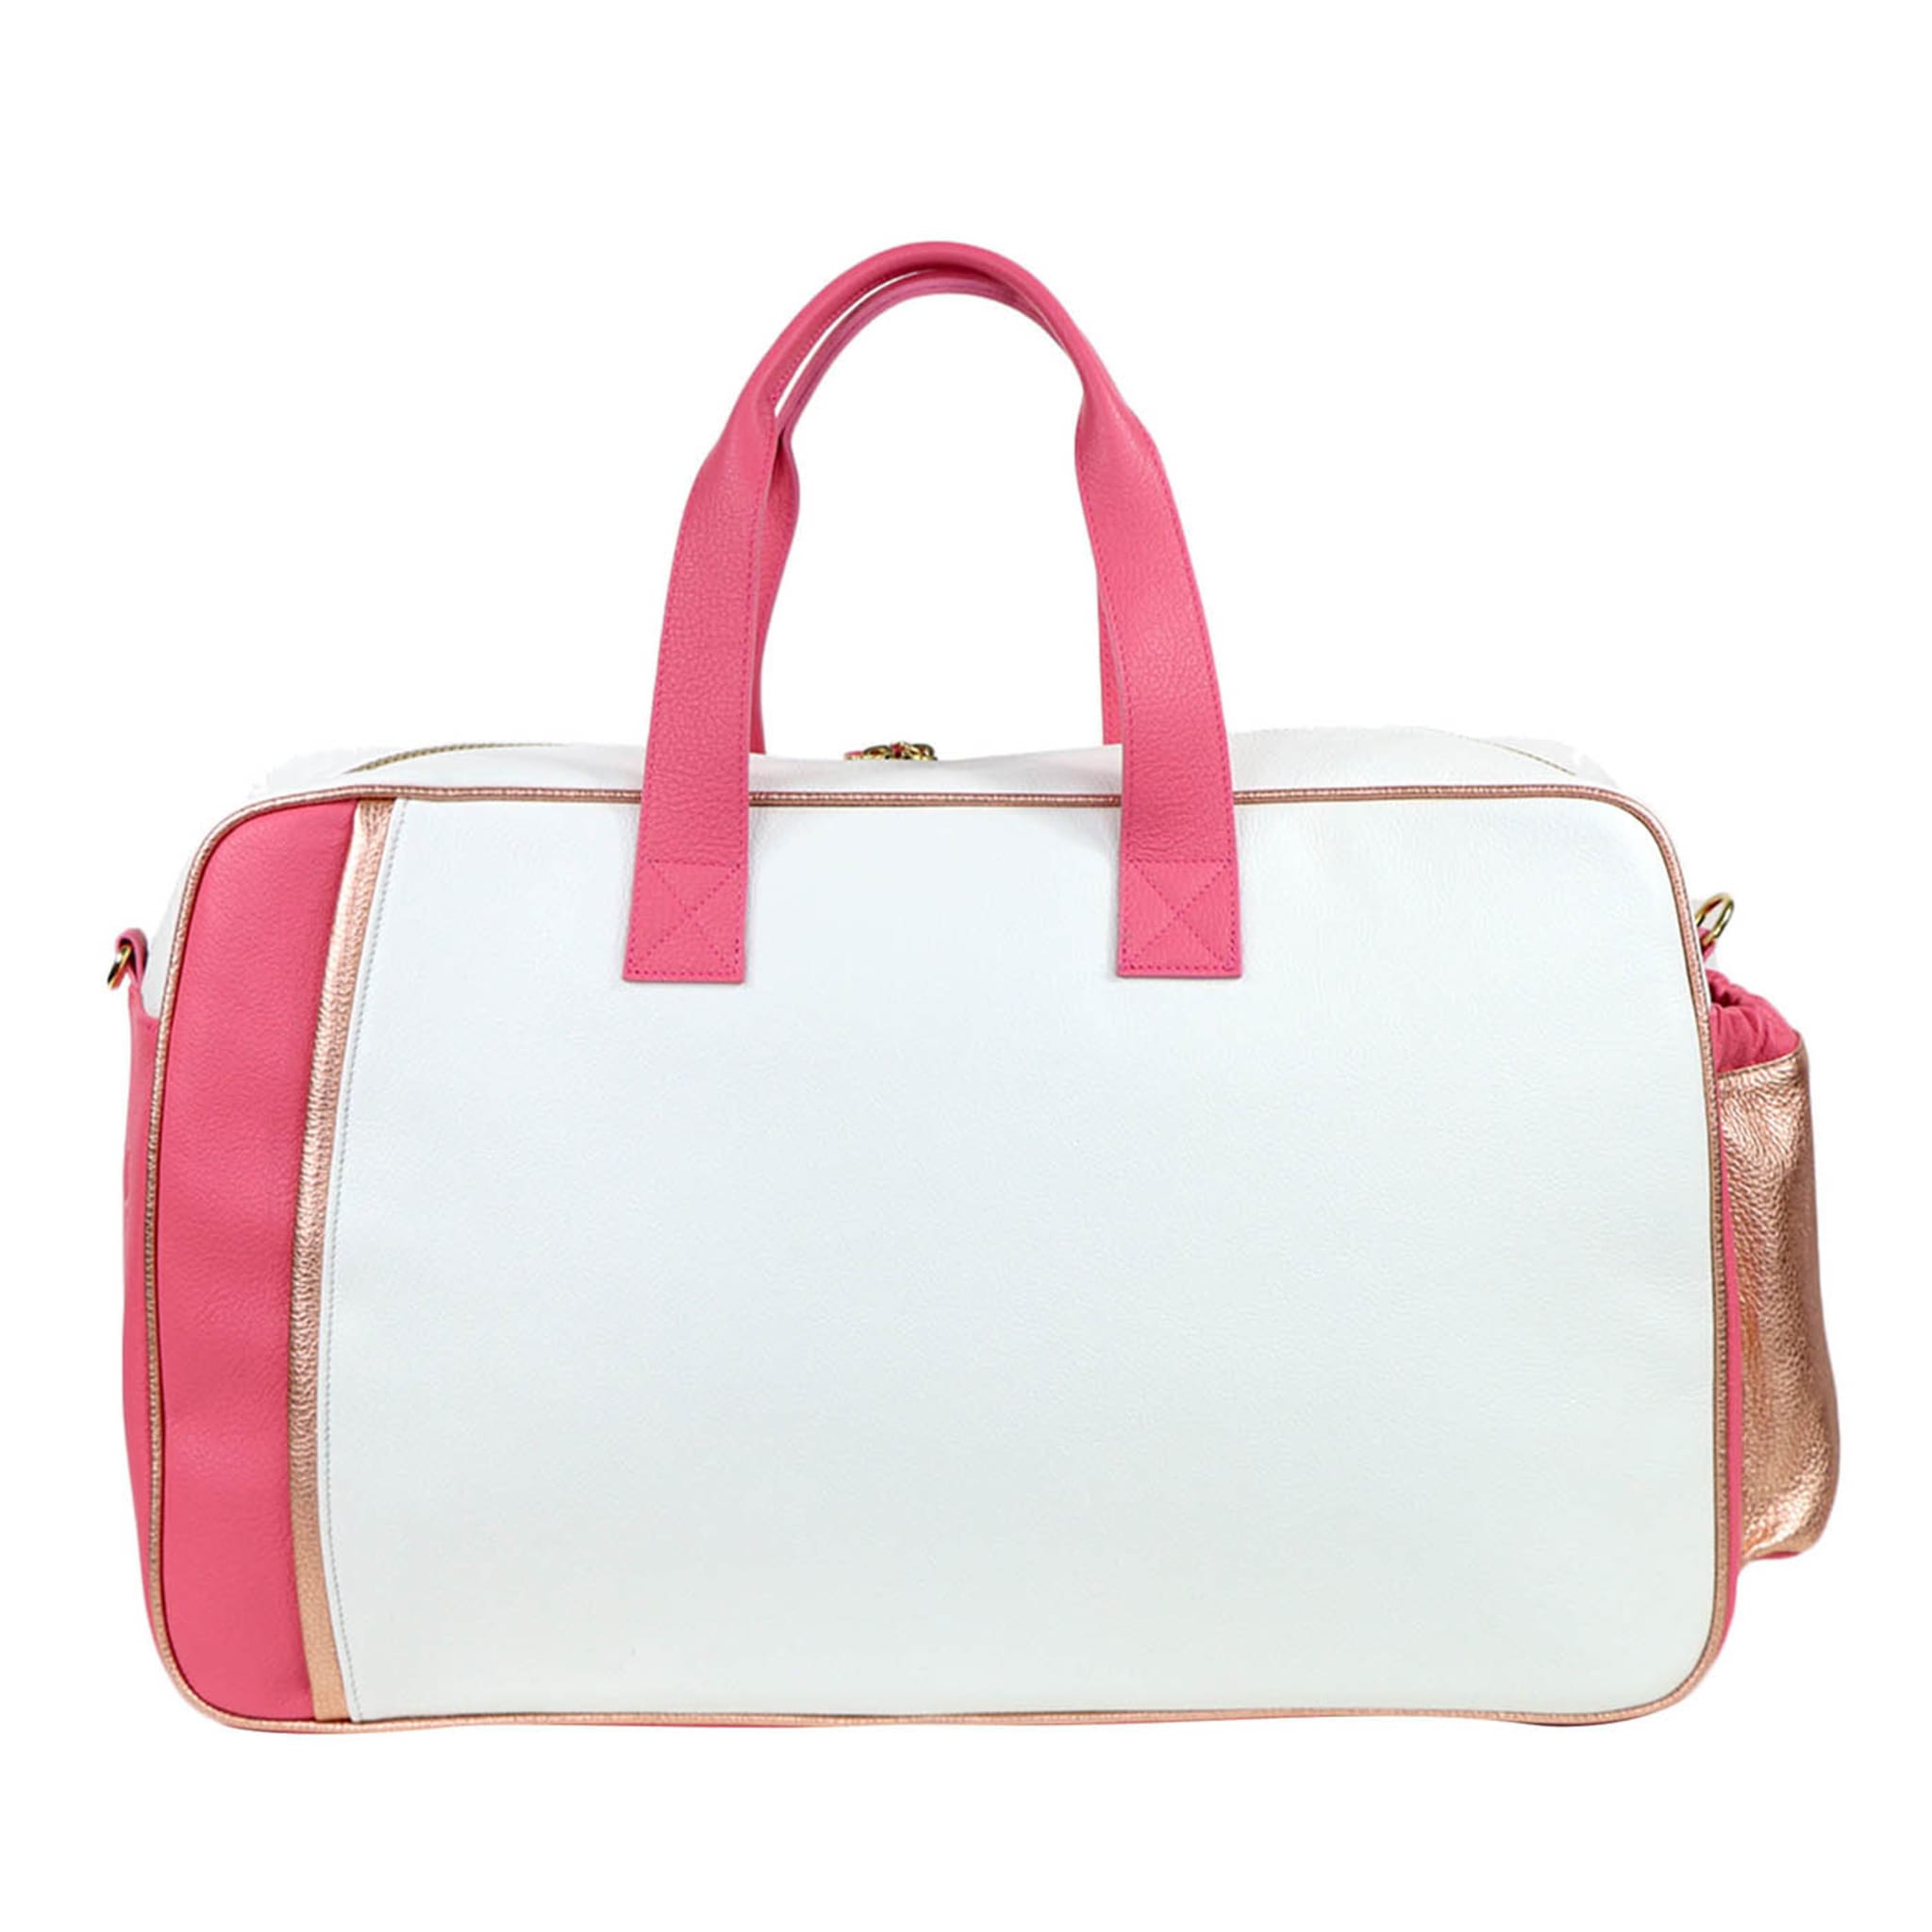 Sport White & Pink Duffle Bag - Main view